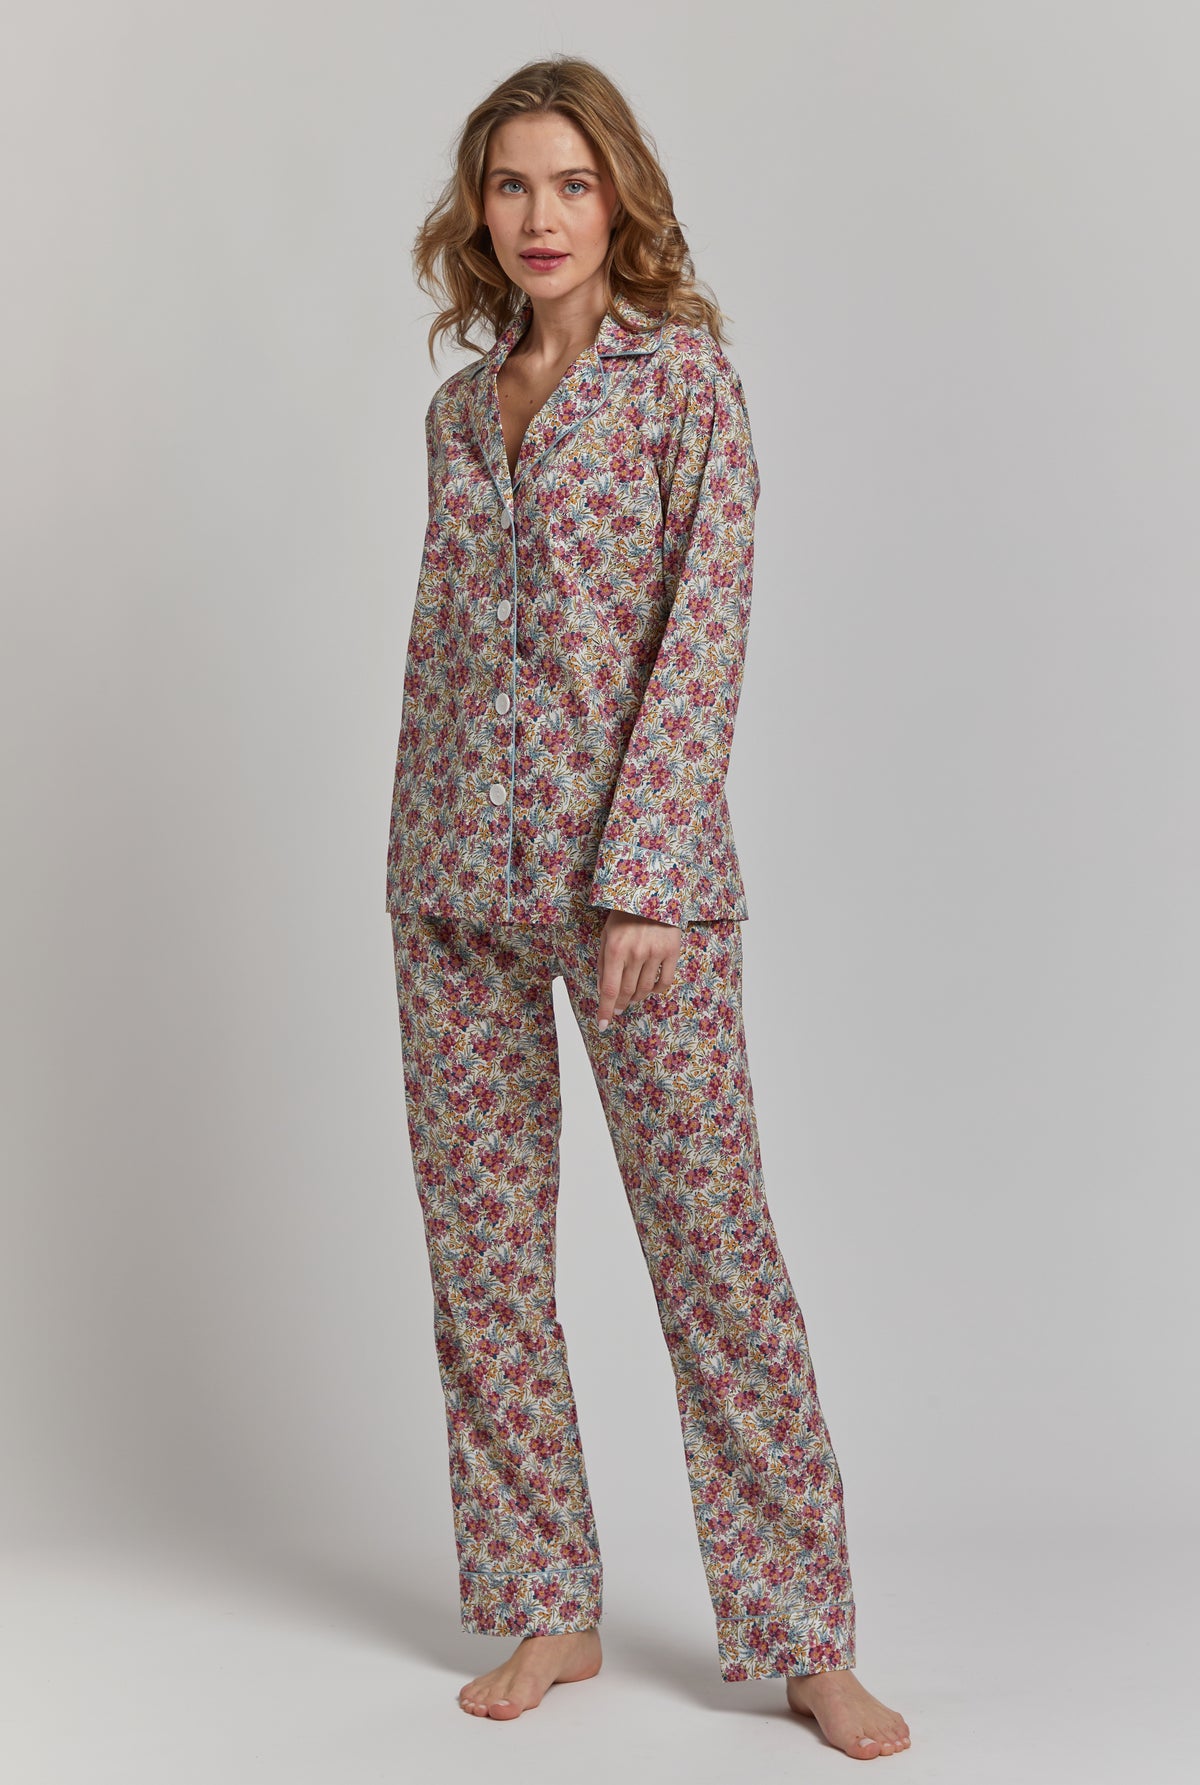 Women's Luxury Cotton Pajamas, Sleepwear, & Robes | Elizabeth Cotton